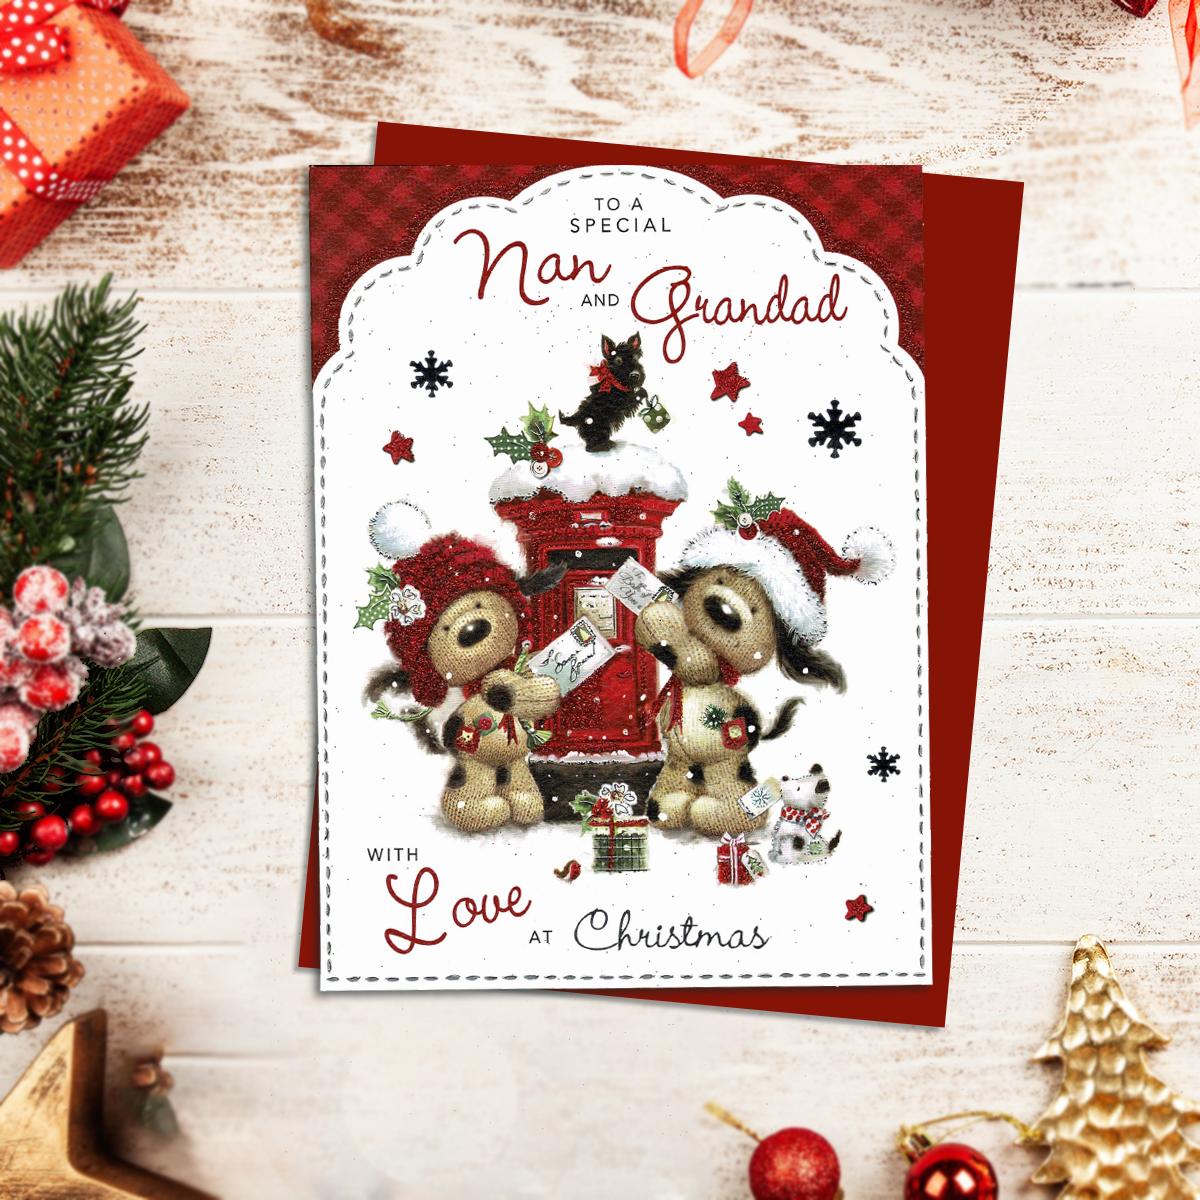 Nan And Grandad Christmas Card Alongside Its Red Envelope